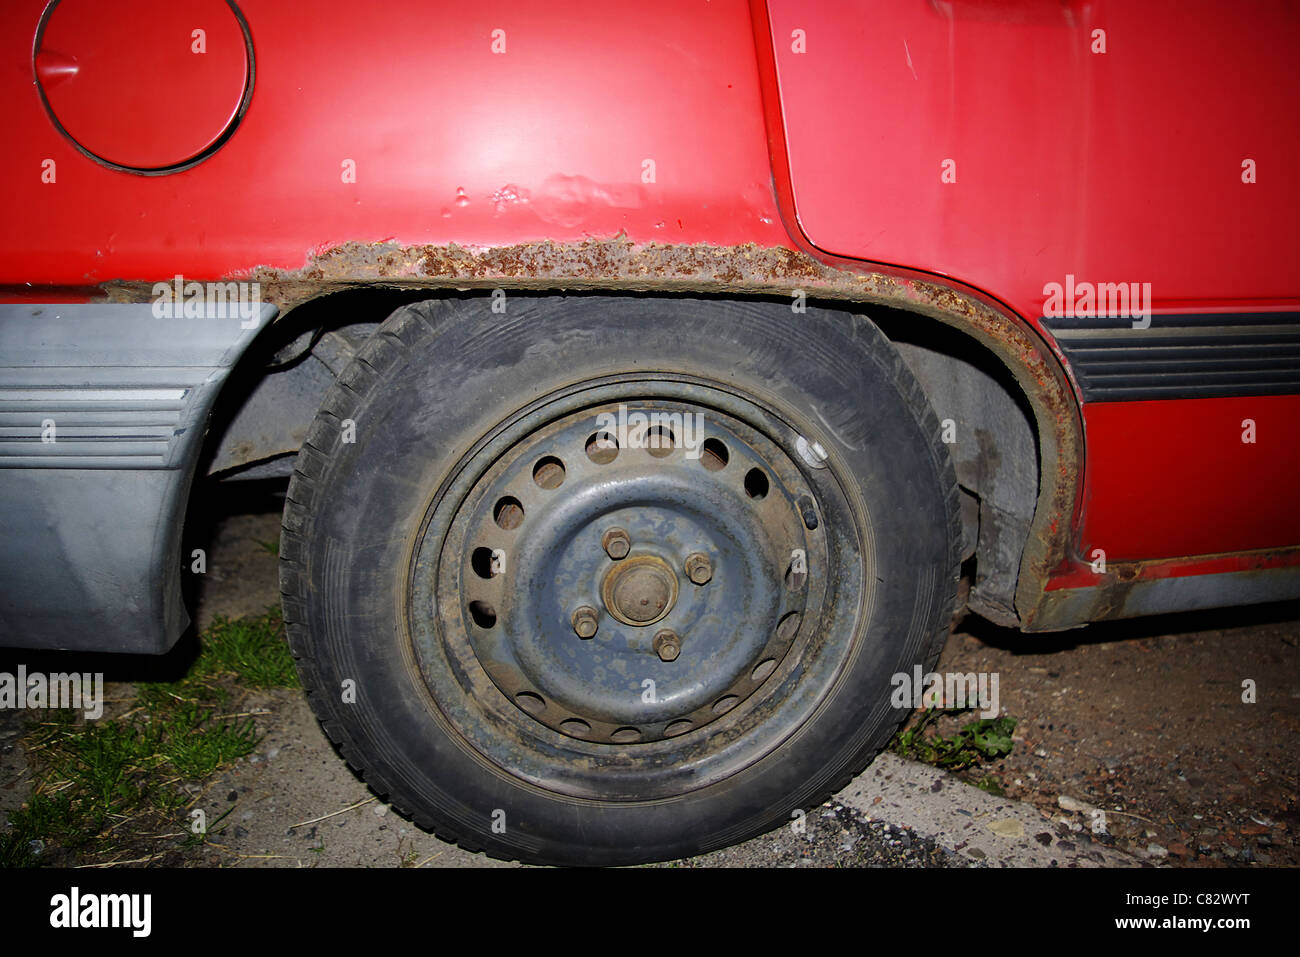 corrosion on a car mudguard, rusty car Stock Photo